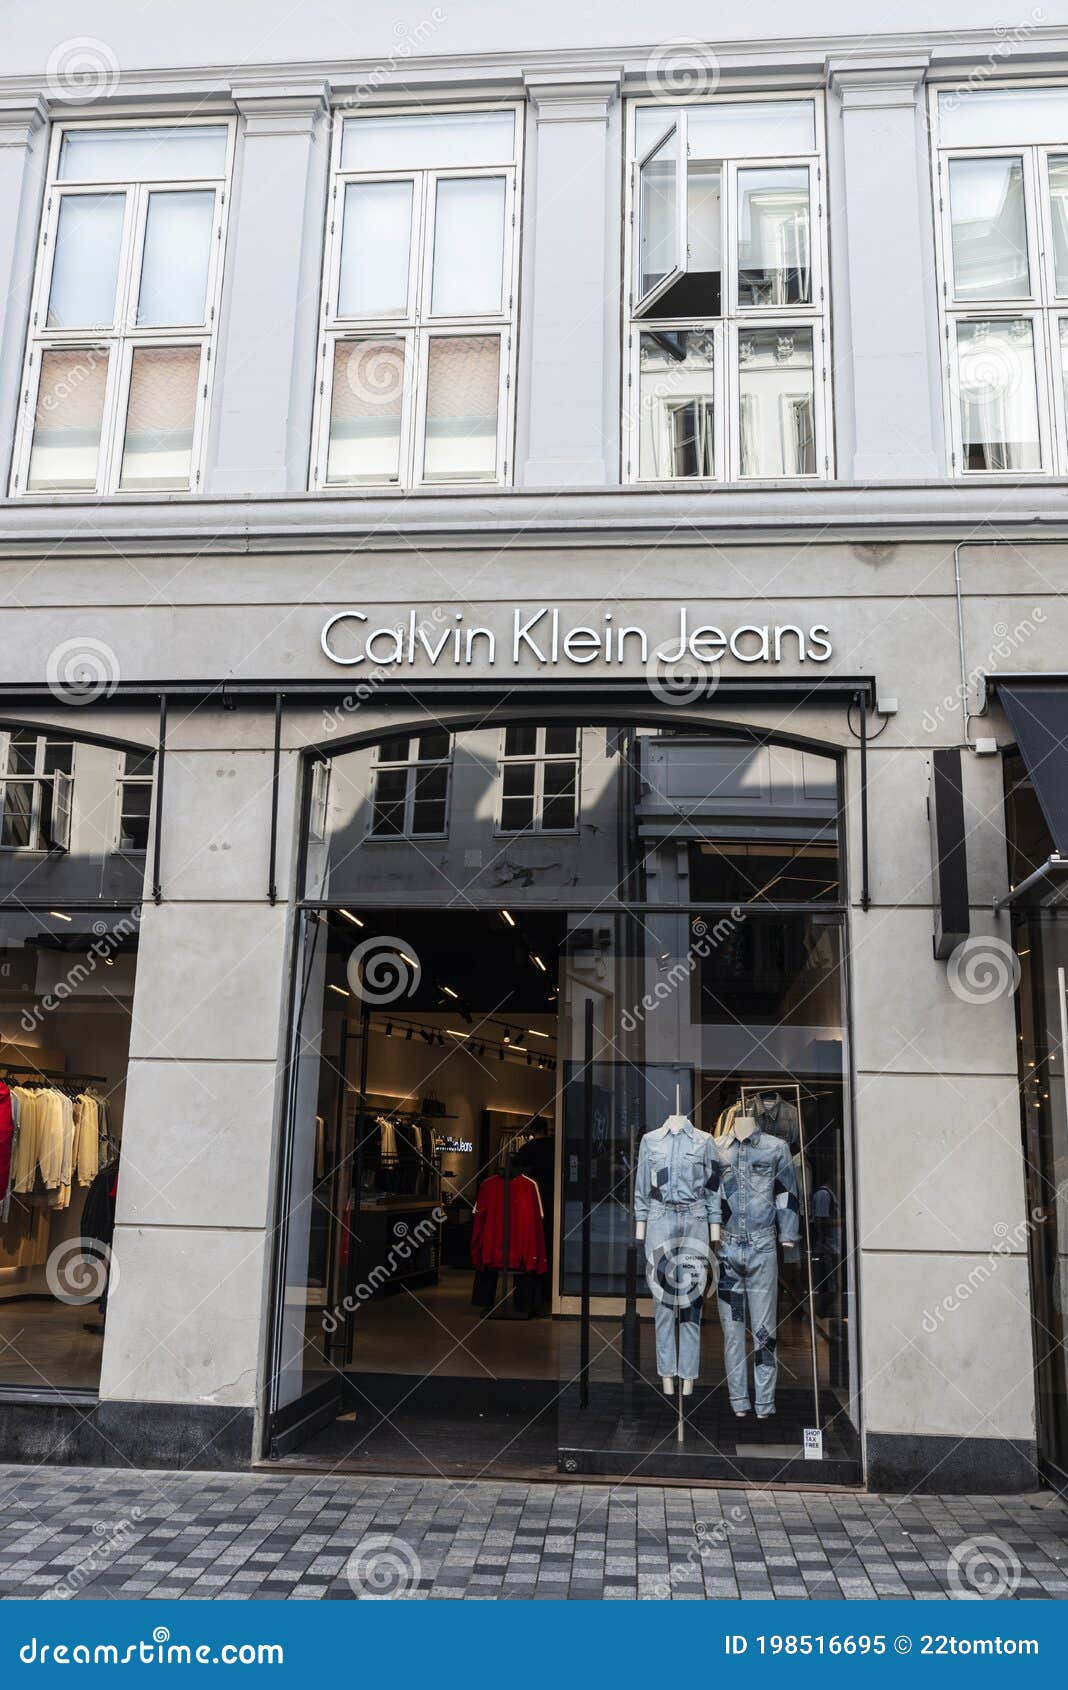 Calvin Klein Jeans Clothing Store in KÃ¸bmagergade Copenhagen, Denmark Editorial Image - Image of cityscape, 198516695